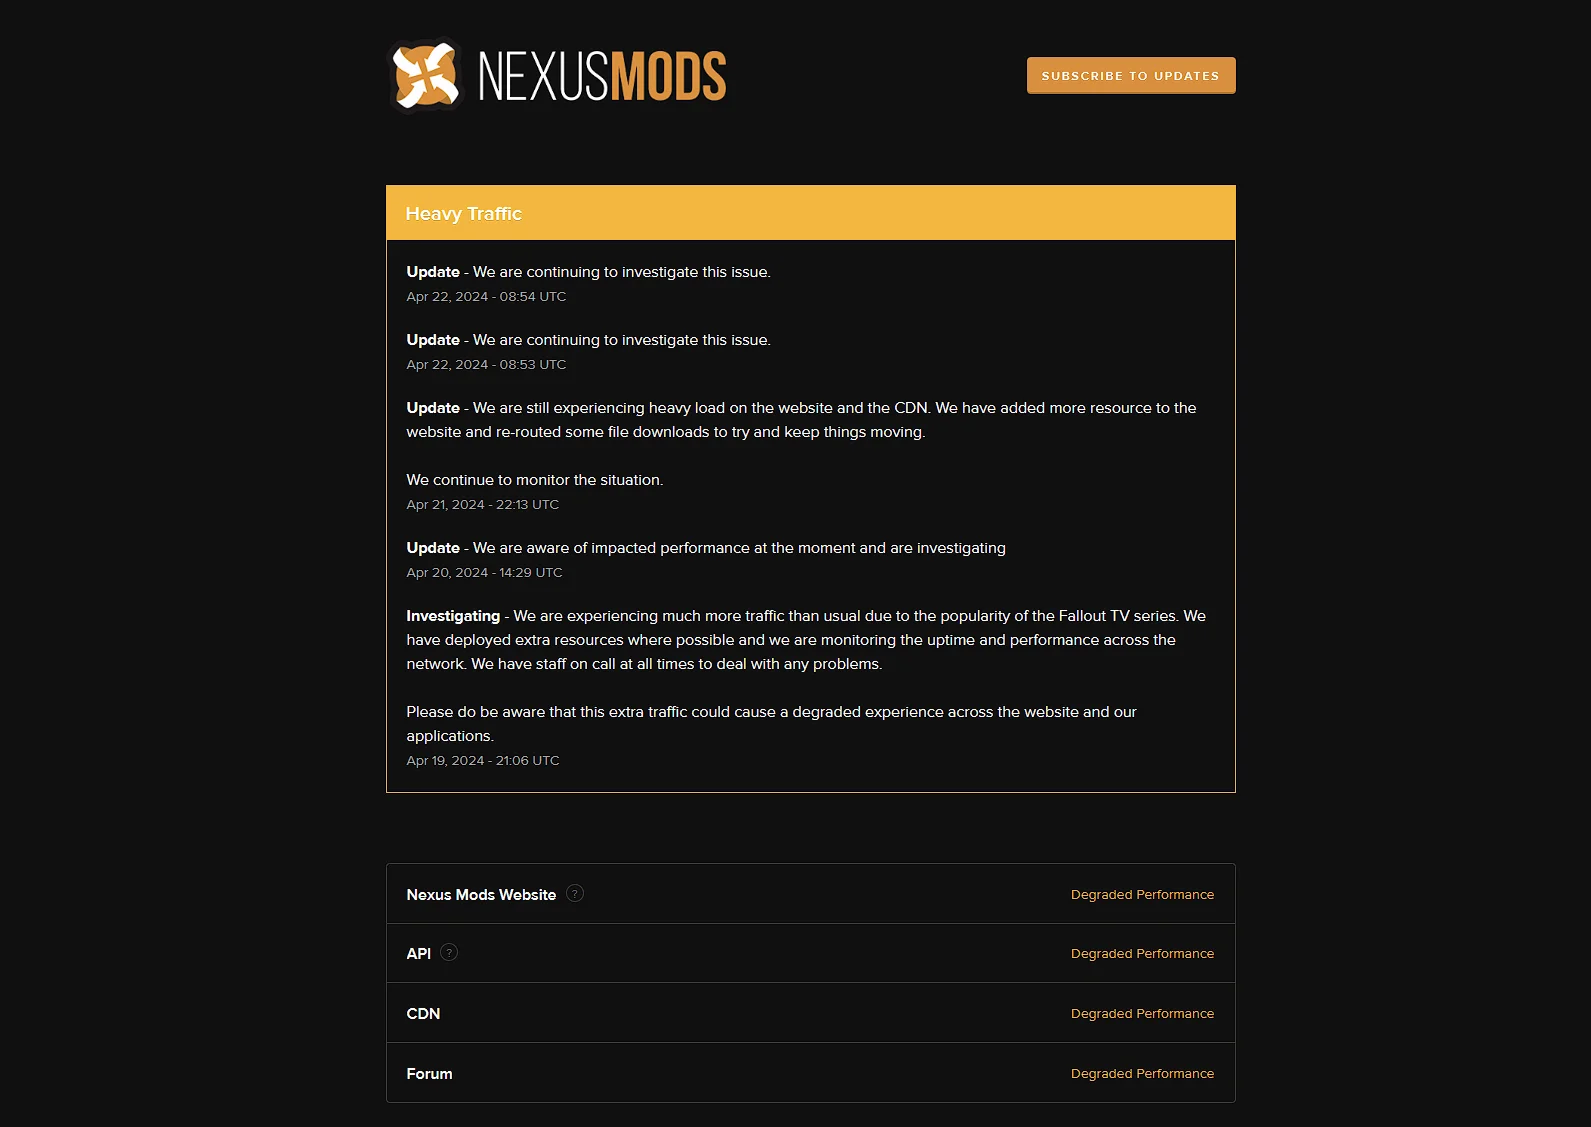 Nexus Mods до сих пор не избавили от проблем из-за популярности «Фоллаута» - фото 1